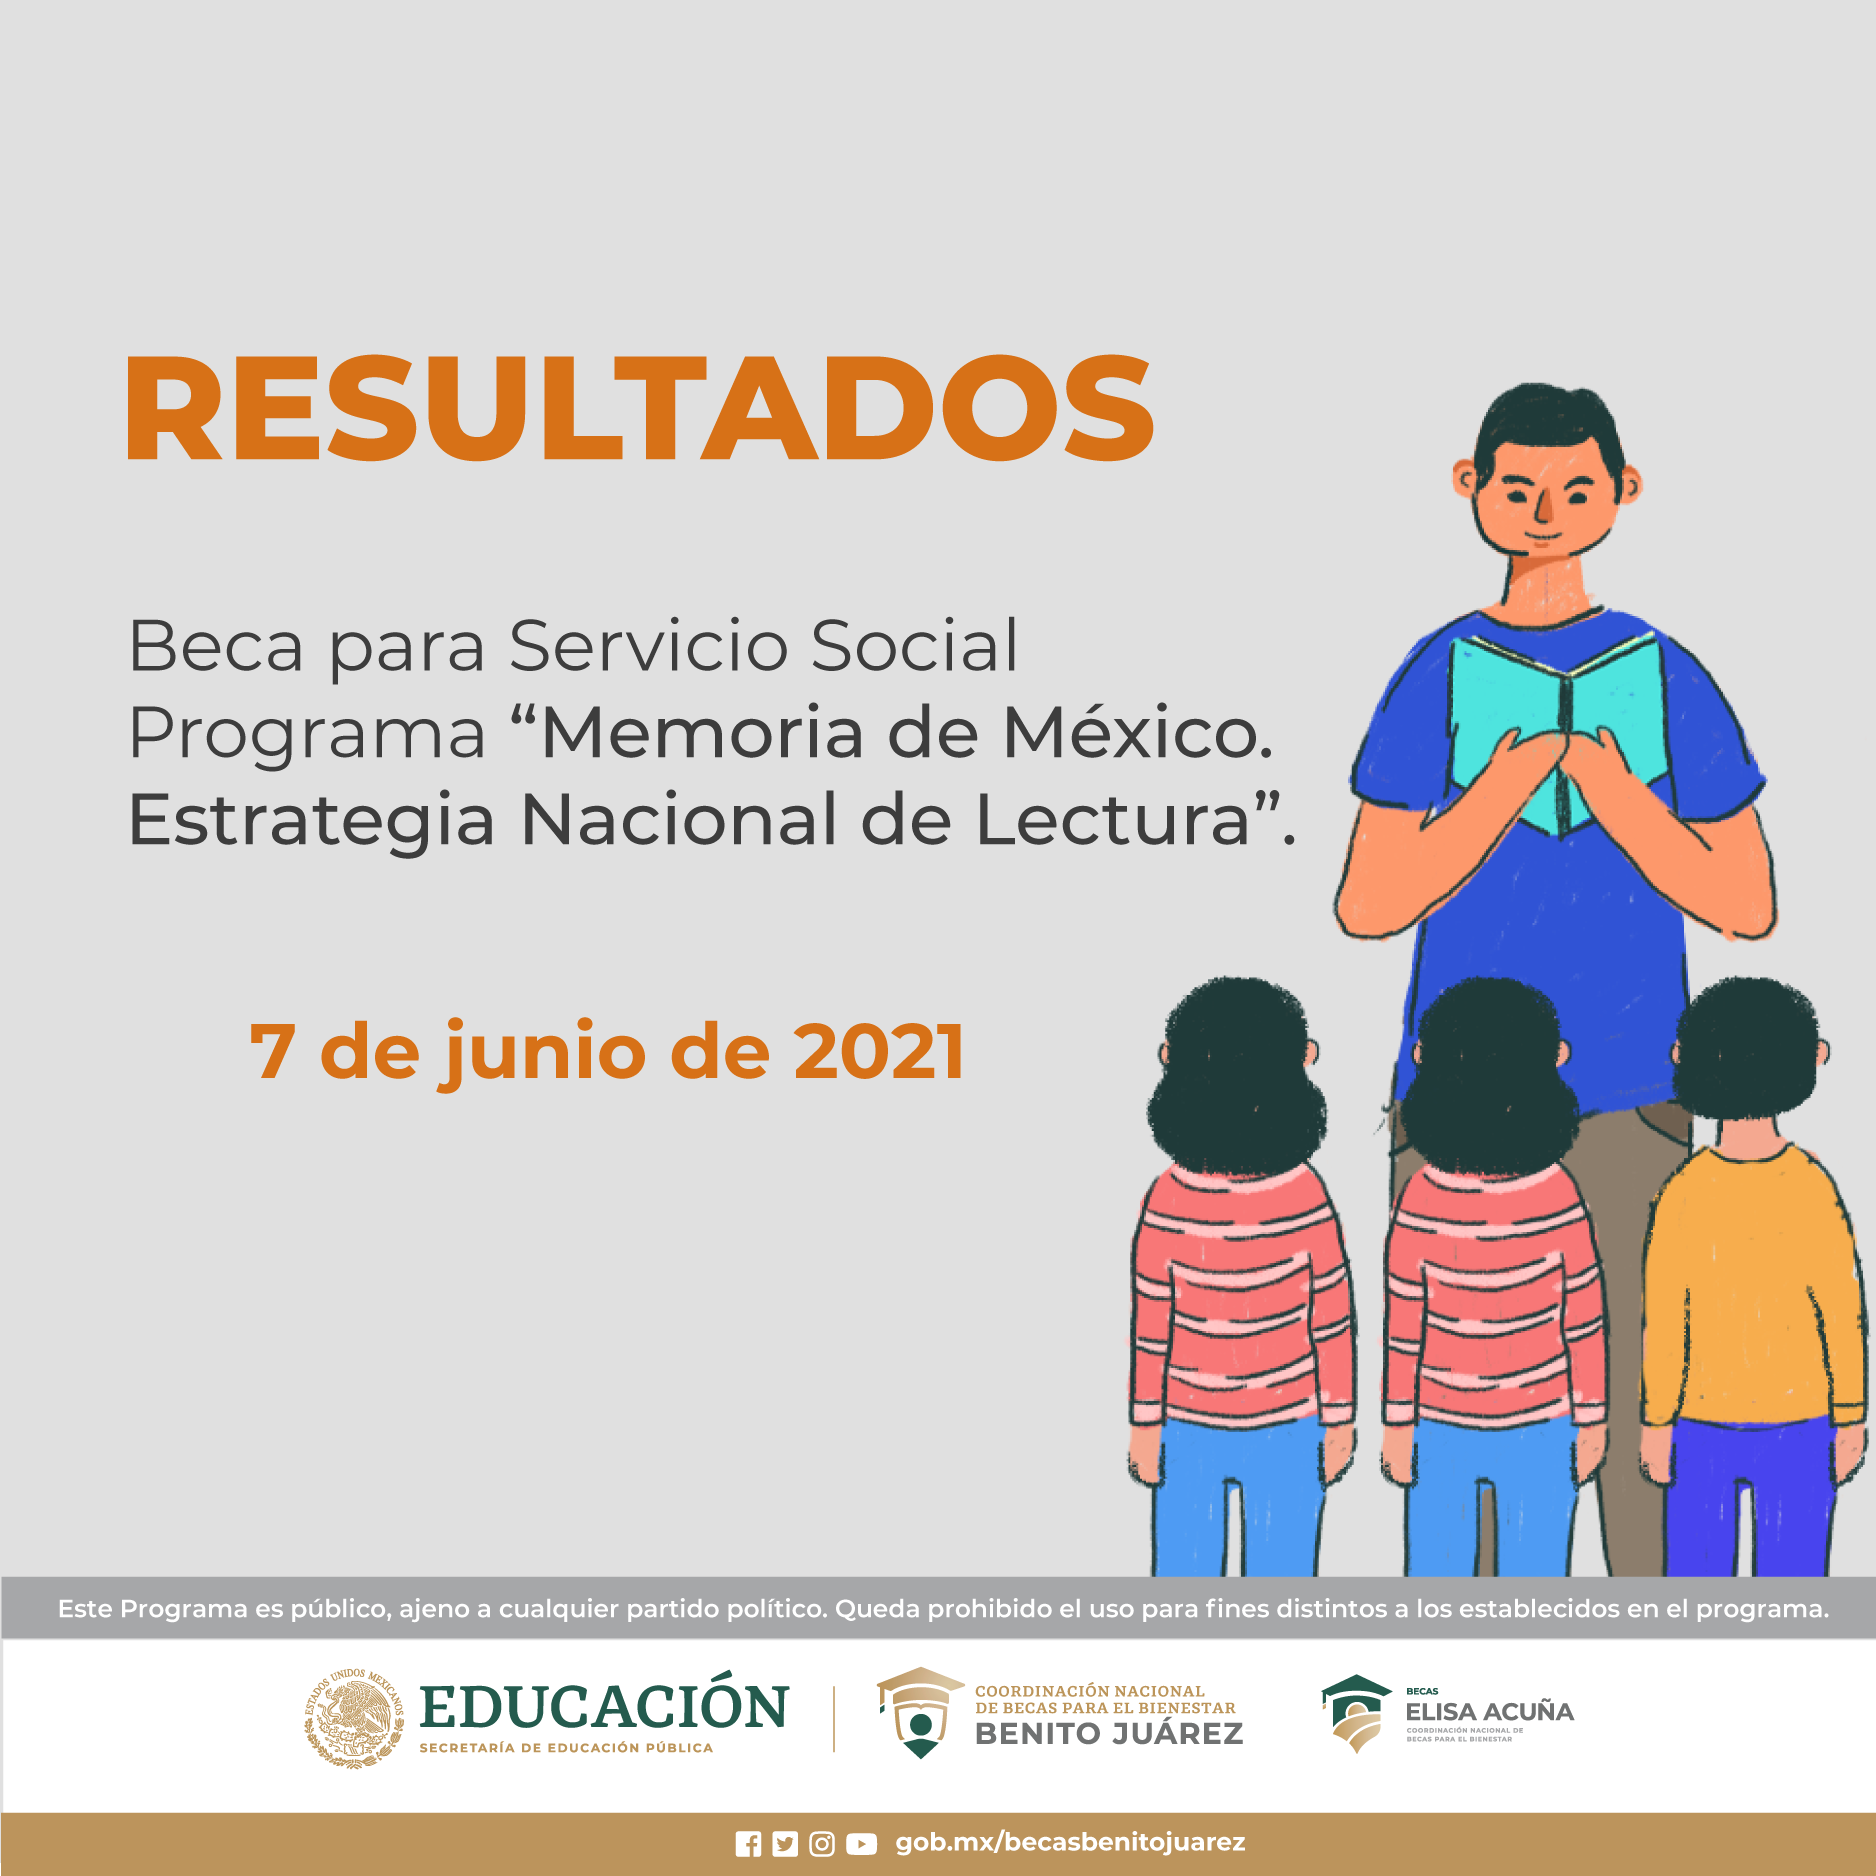 /cms/uploads/image/file/651959/beca_servicio_social_estrategia_nacional_de_lectura_WEB.png